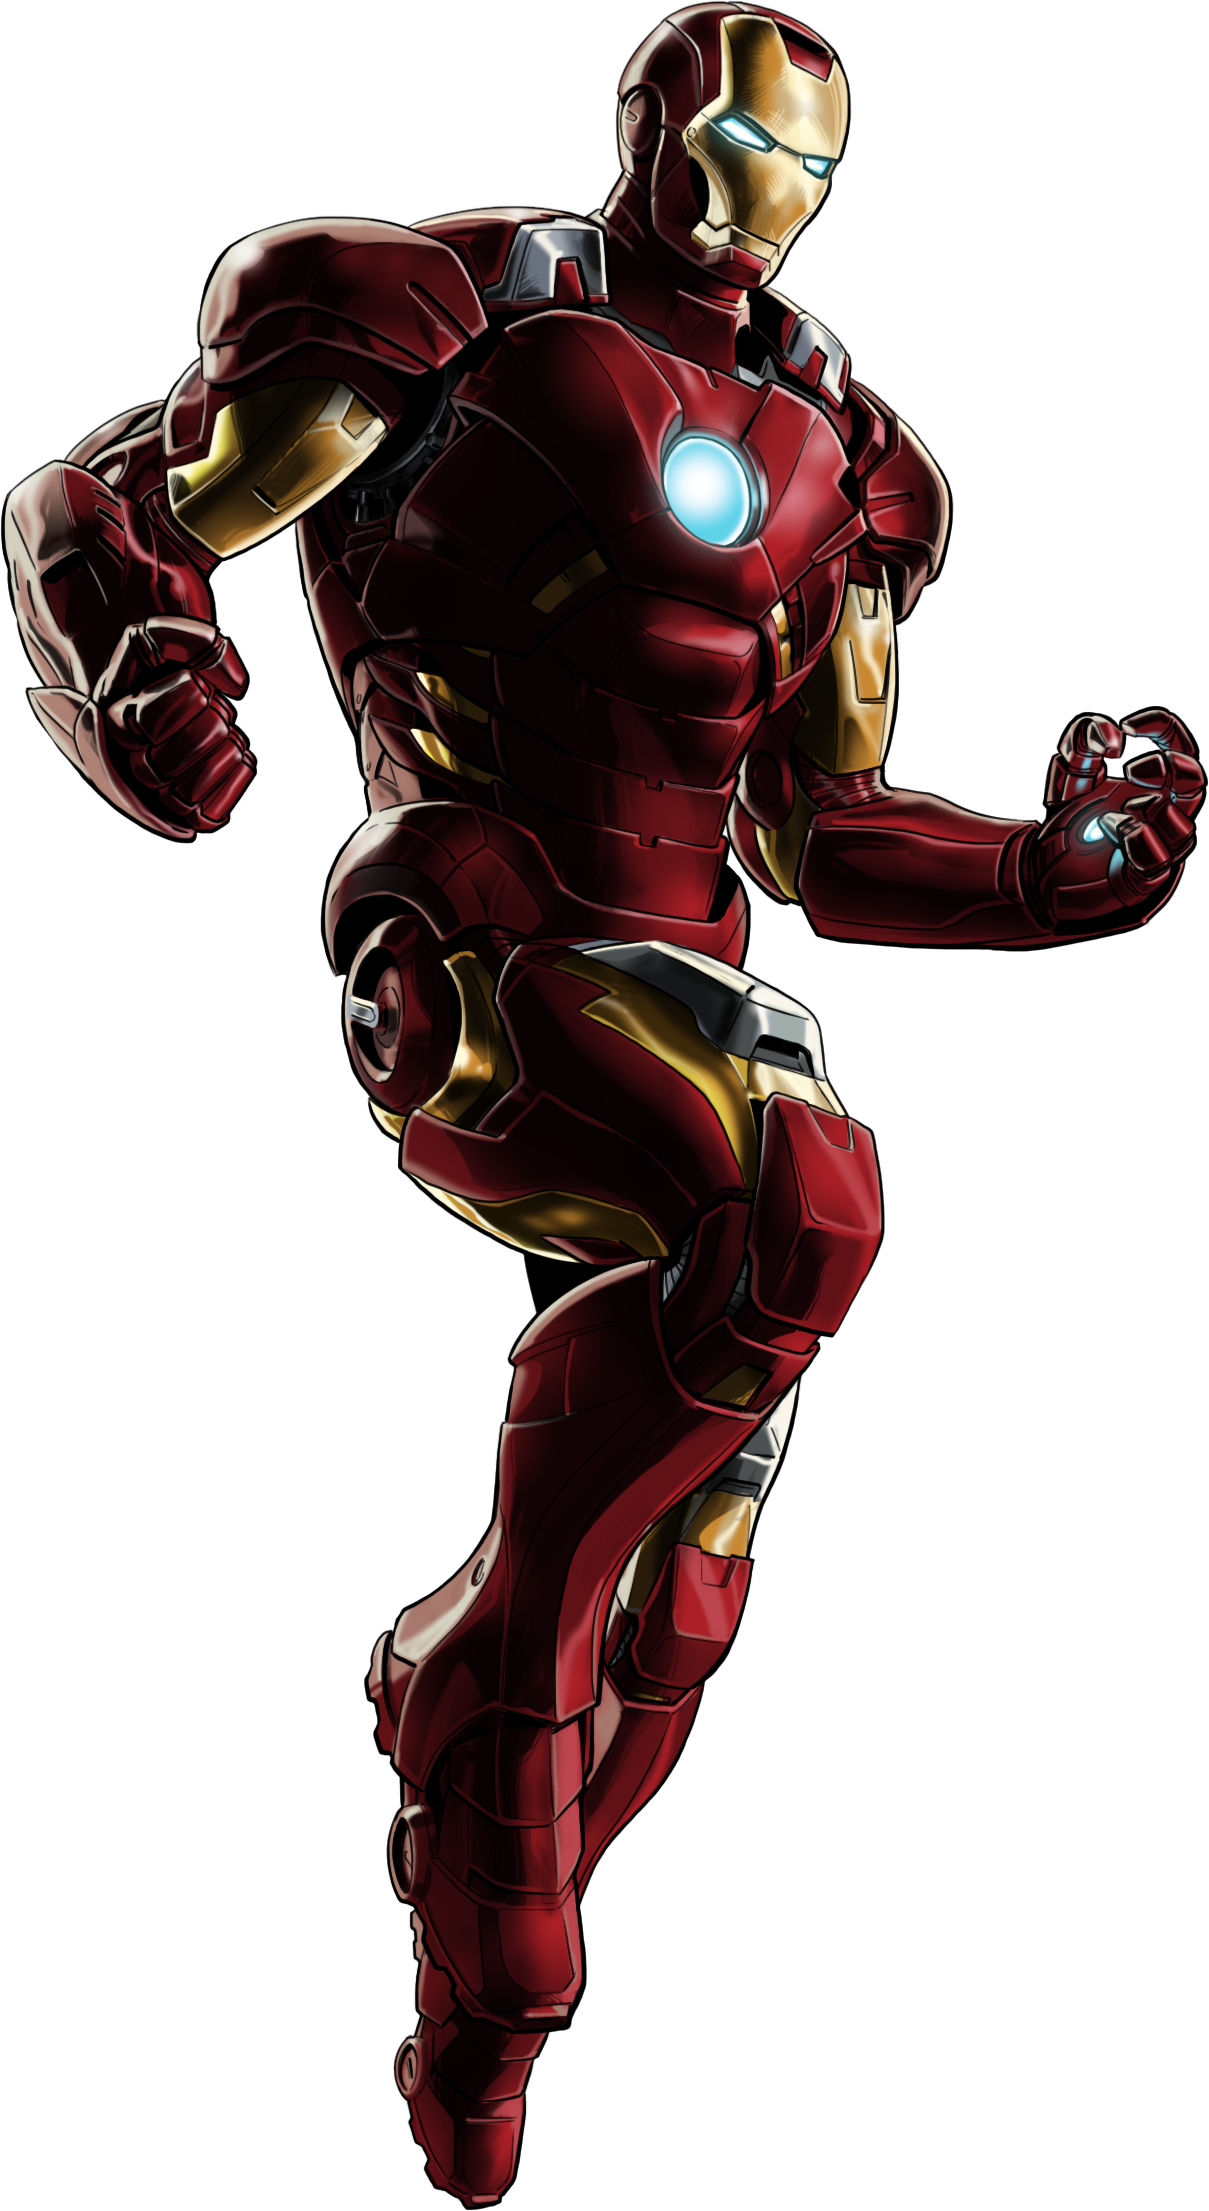 Image - Avengers Iron Man Portrait Art.png - Marvel ...